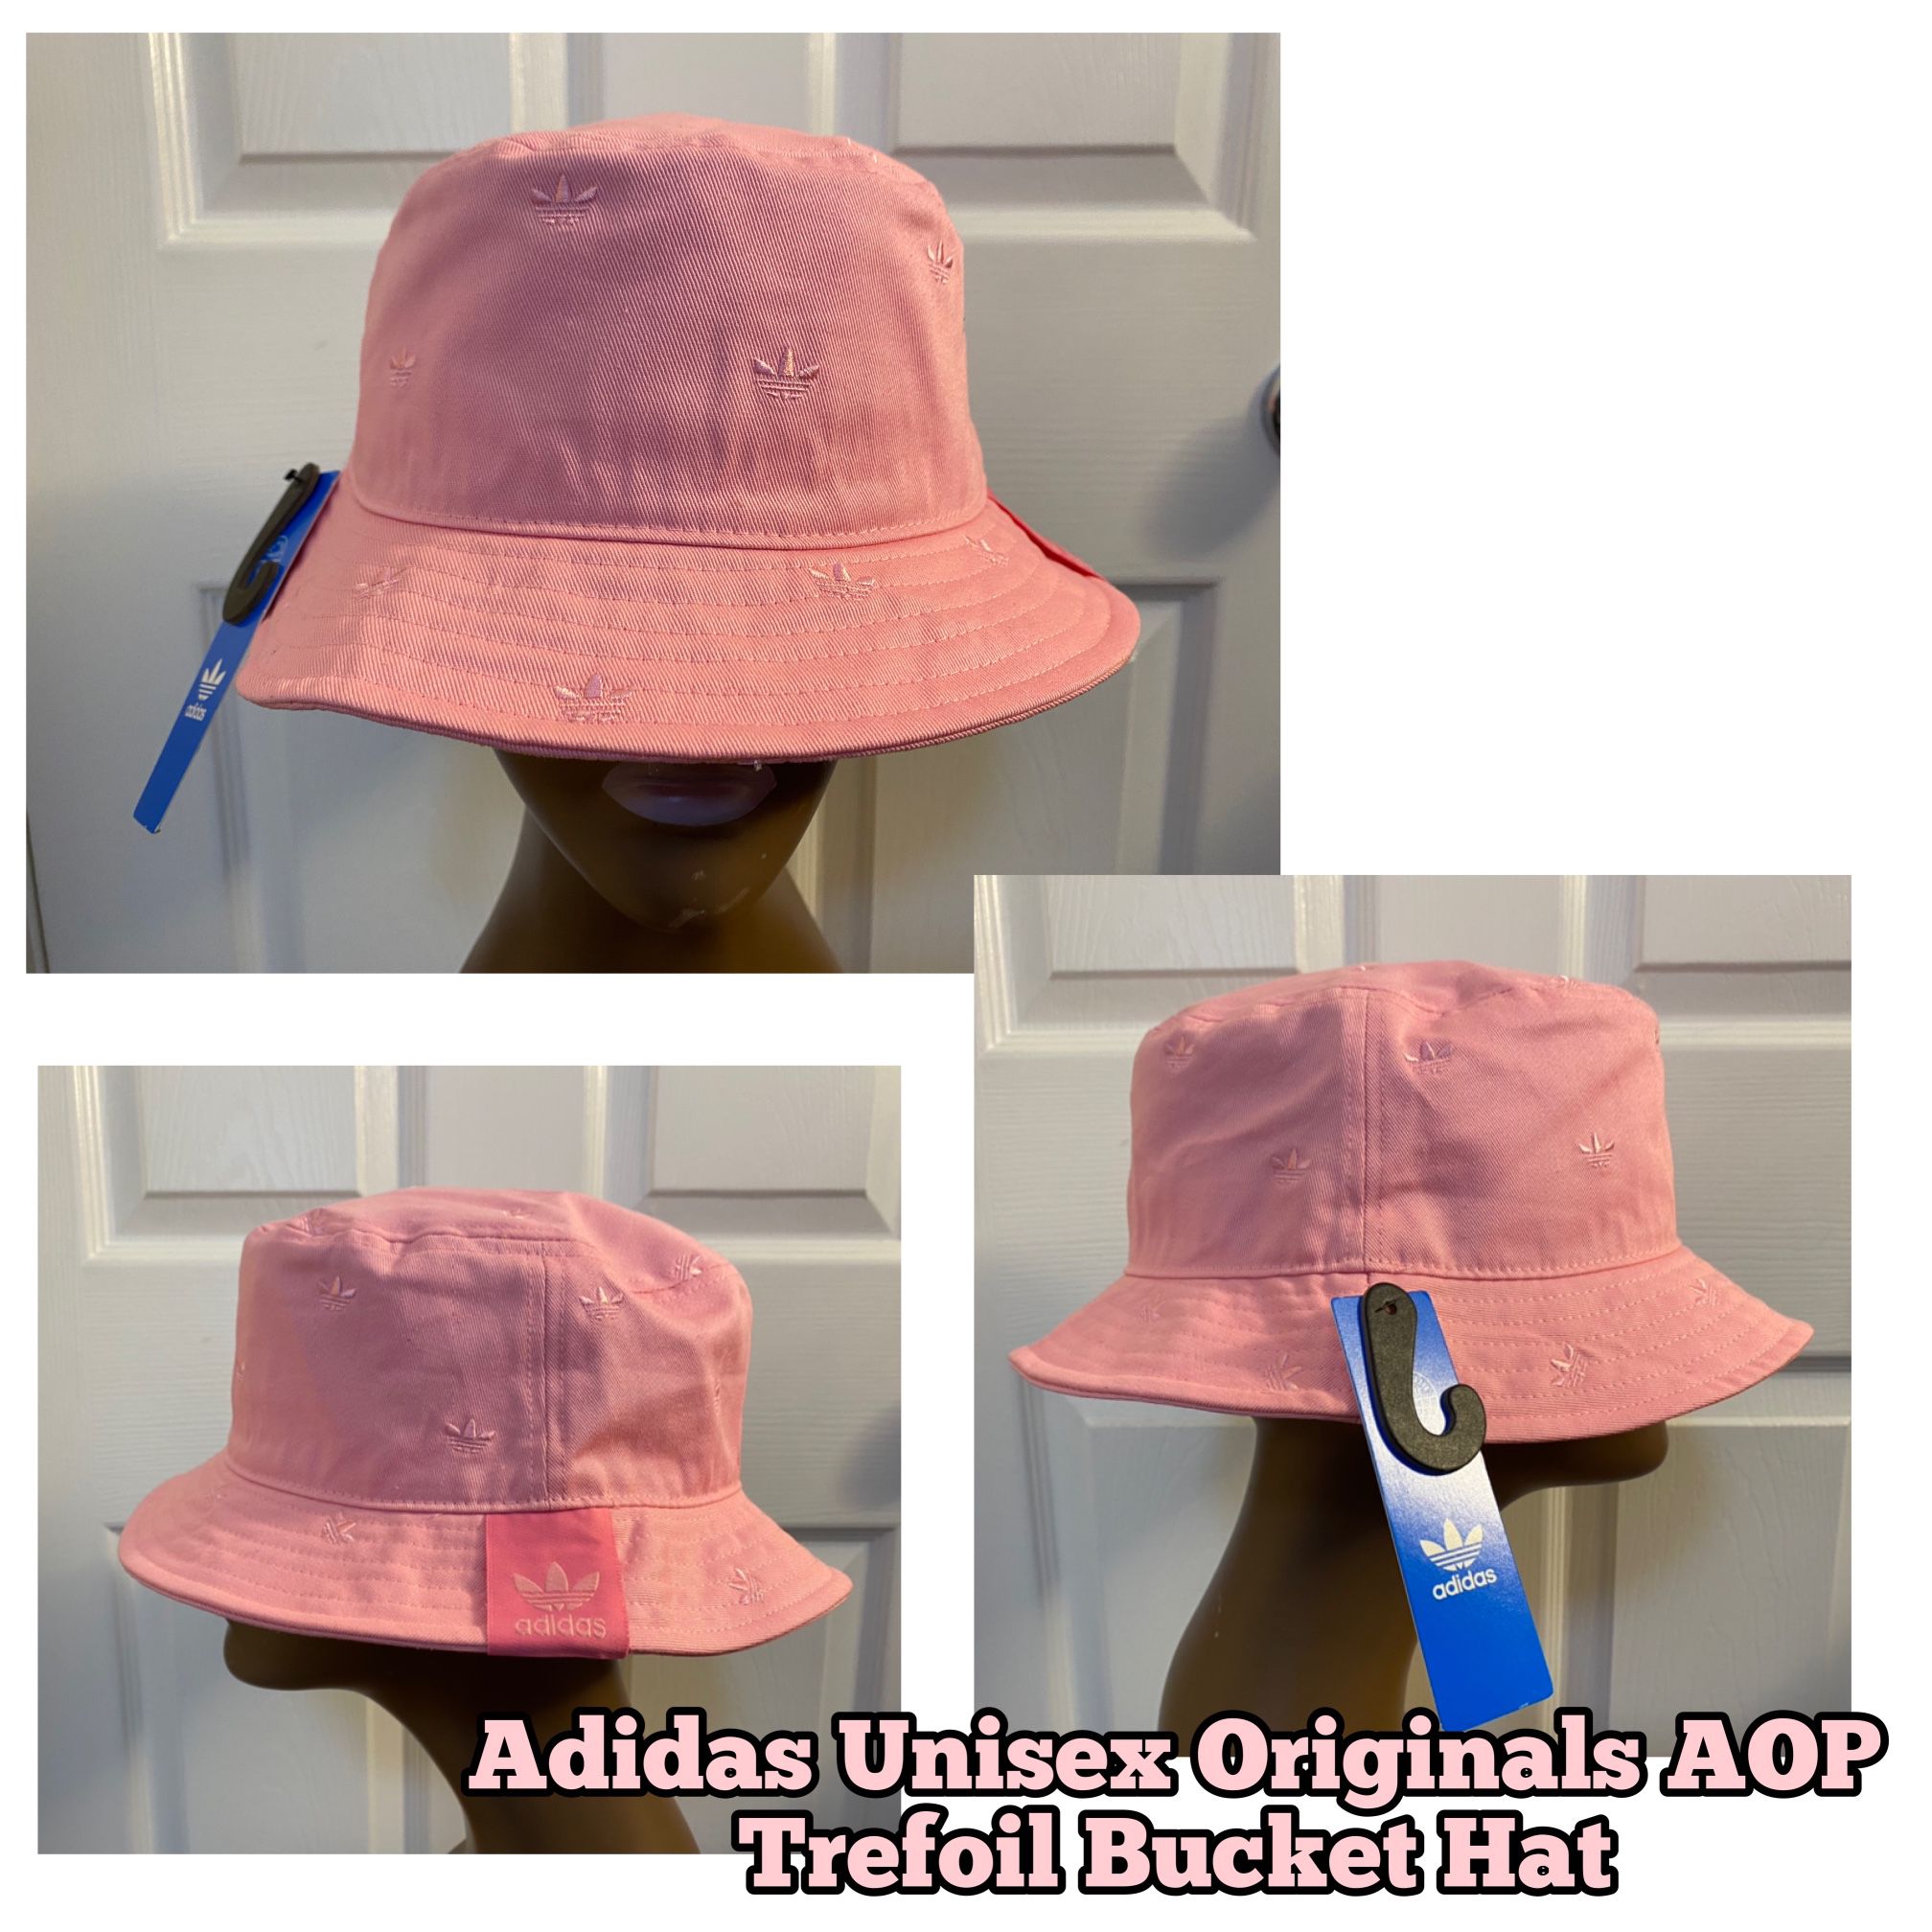 Adidas Unisex Originals AOP Trefoil Bucket Hat pink New Tags OSFA